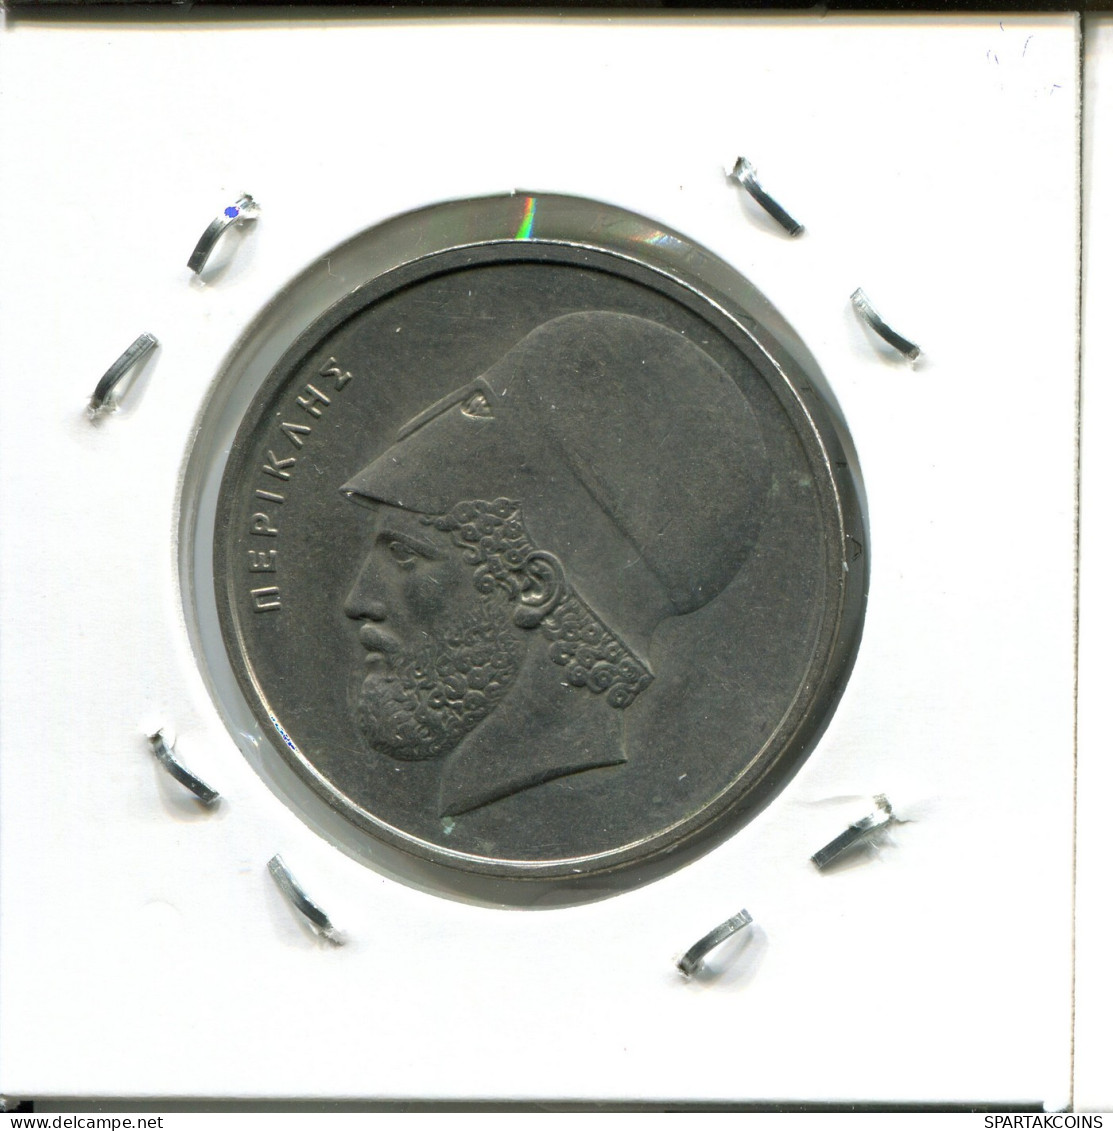 20 DRACHMES 1976 GREECE Coin #AW720.U.A - Griekenland